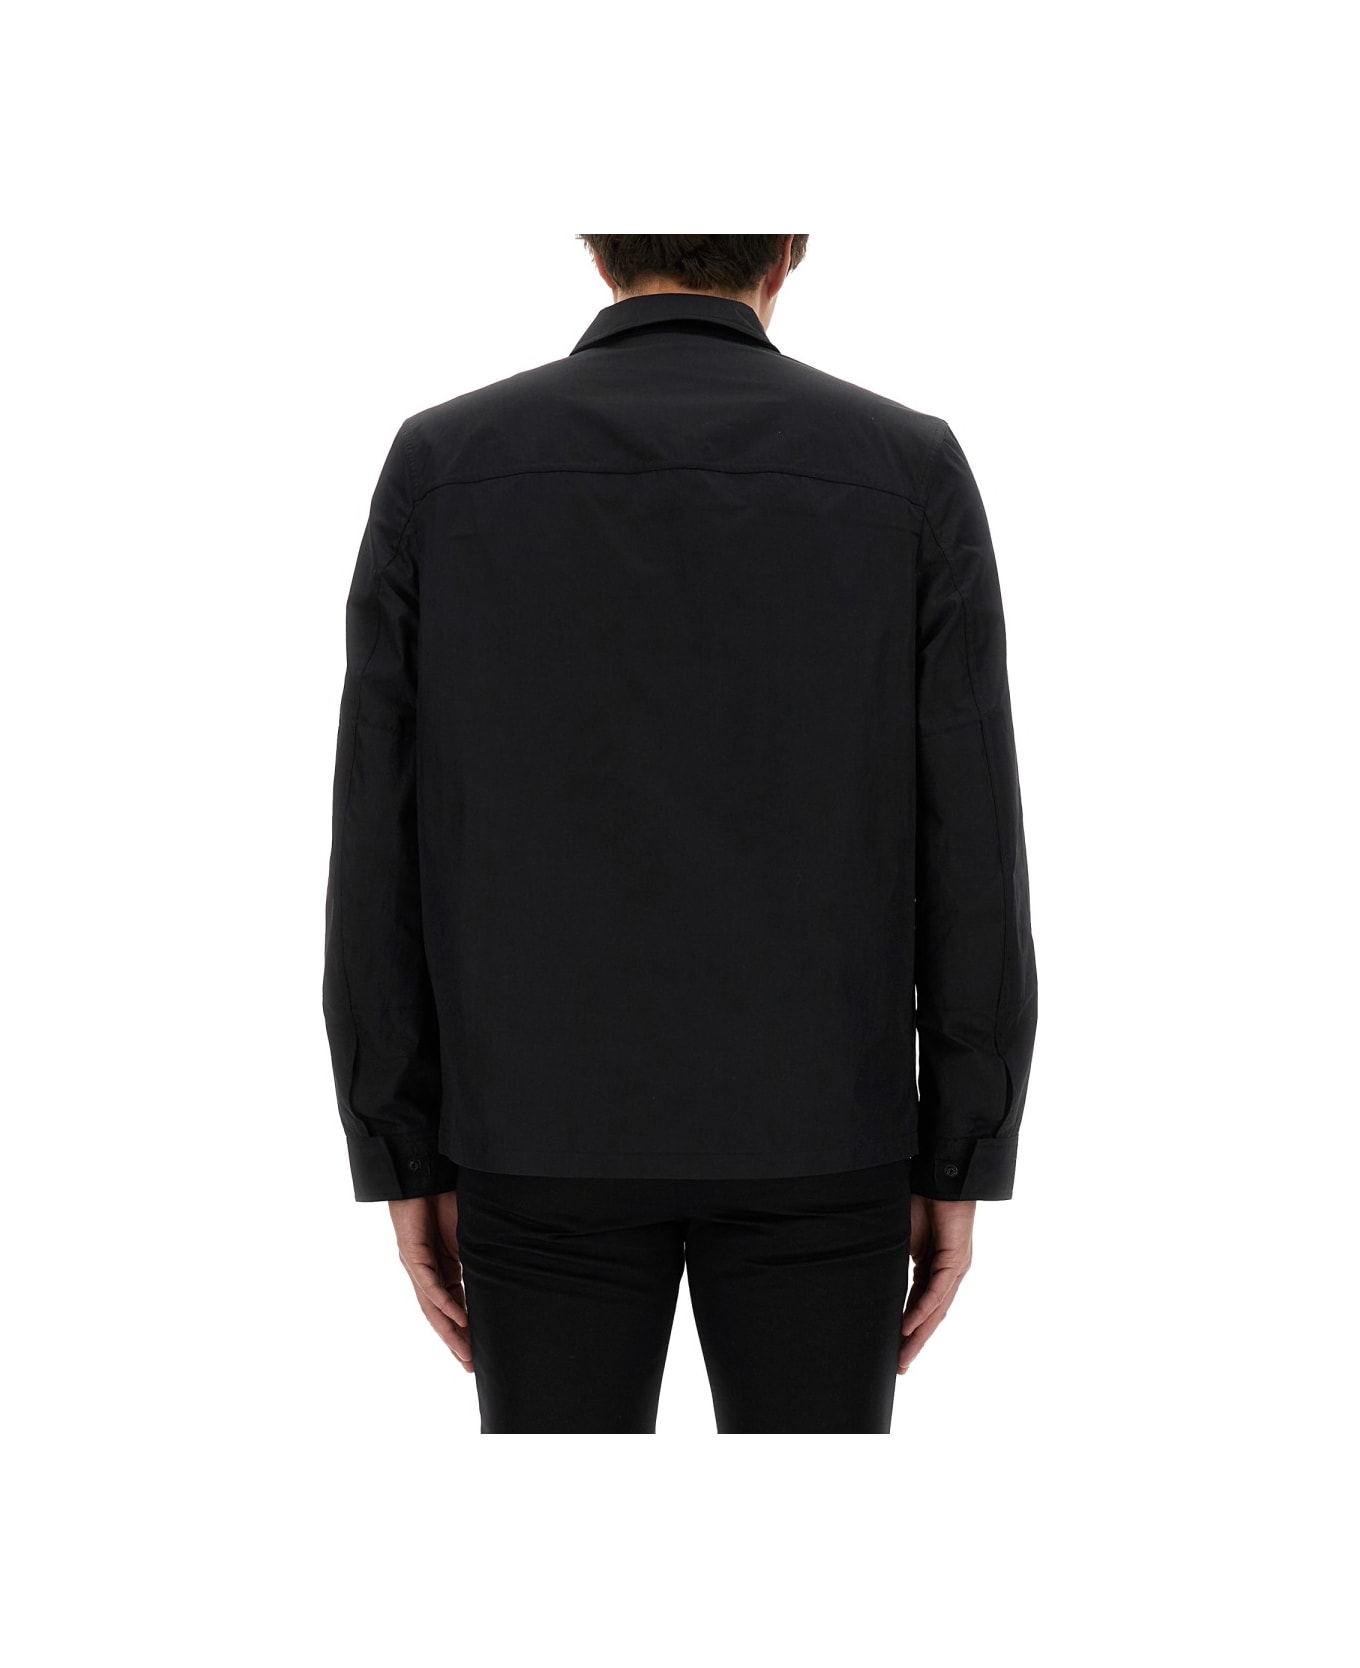 Belstaff Shirt Jacket - BLACK ジャケット